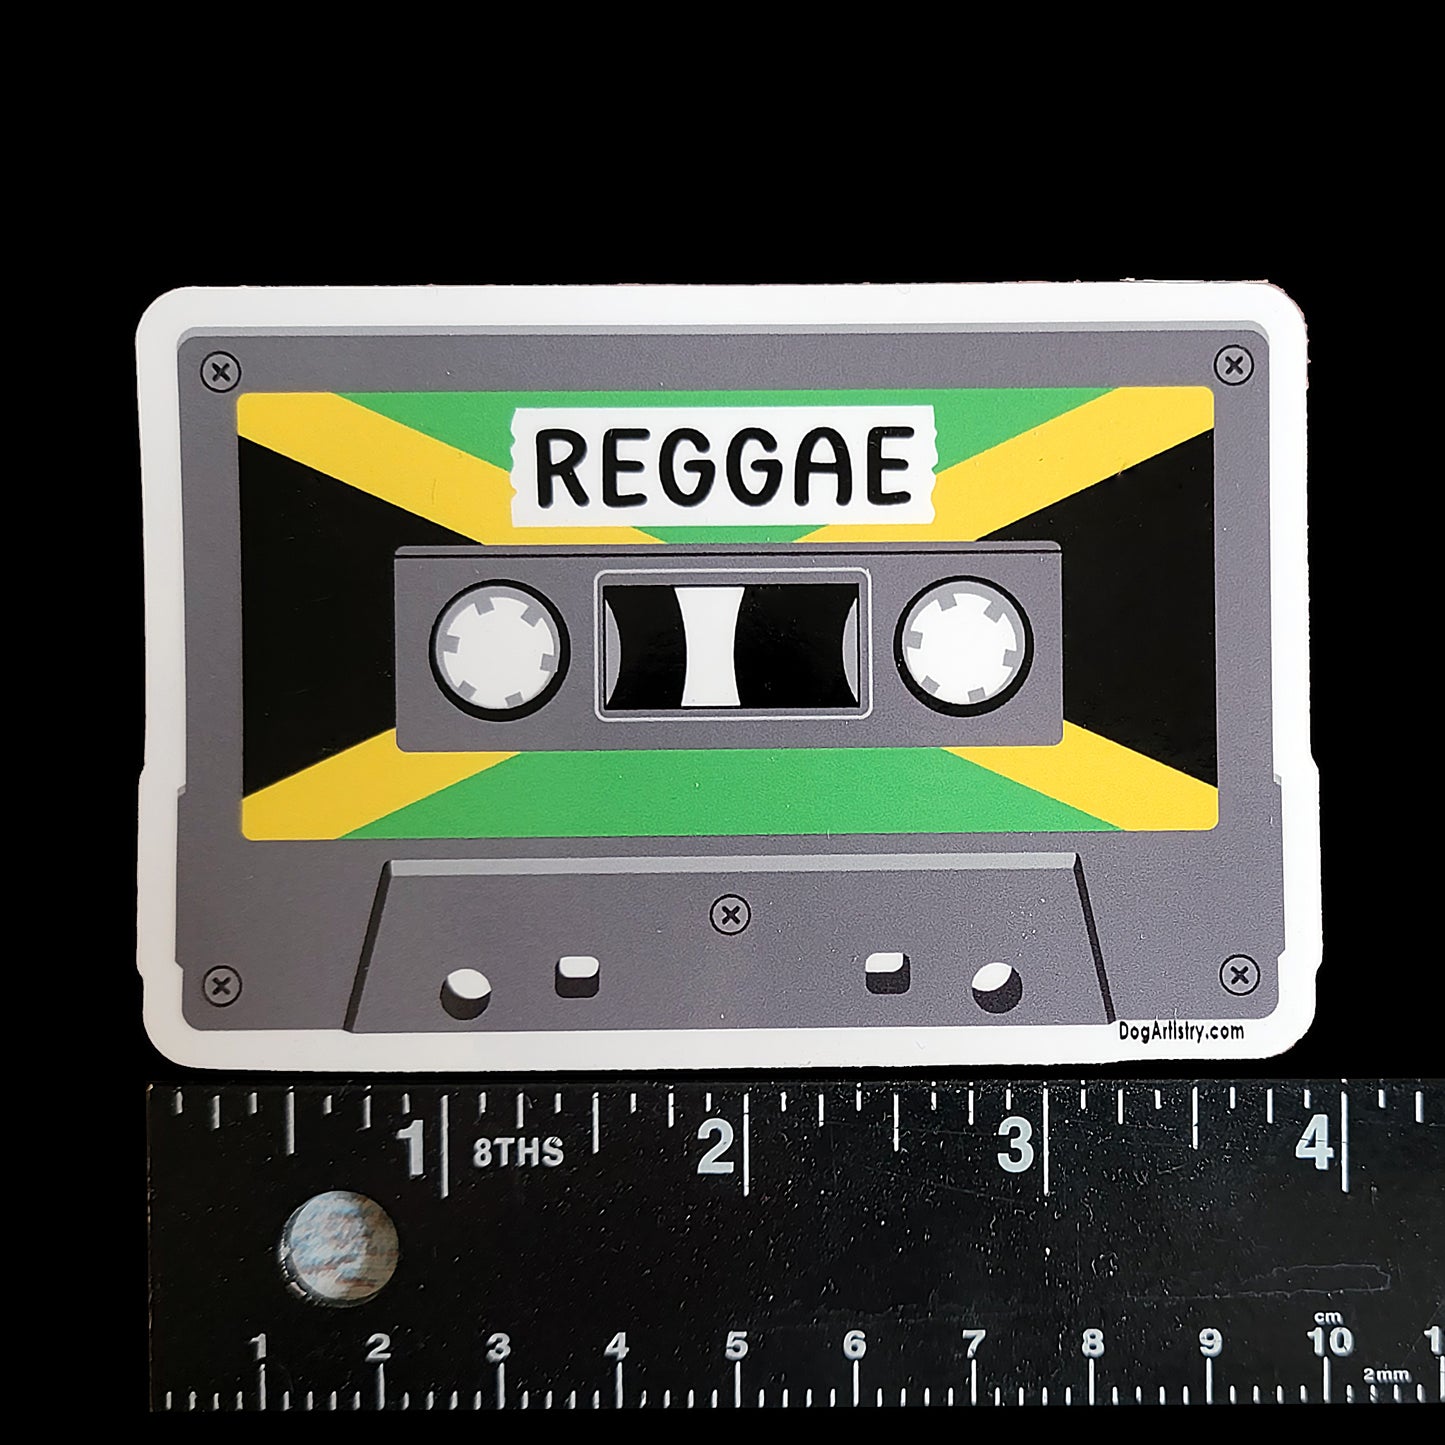 Reggae music cassette tape with Jamaican flag die-cut vinyl sticker by Dog Artistry.